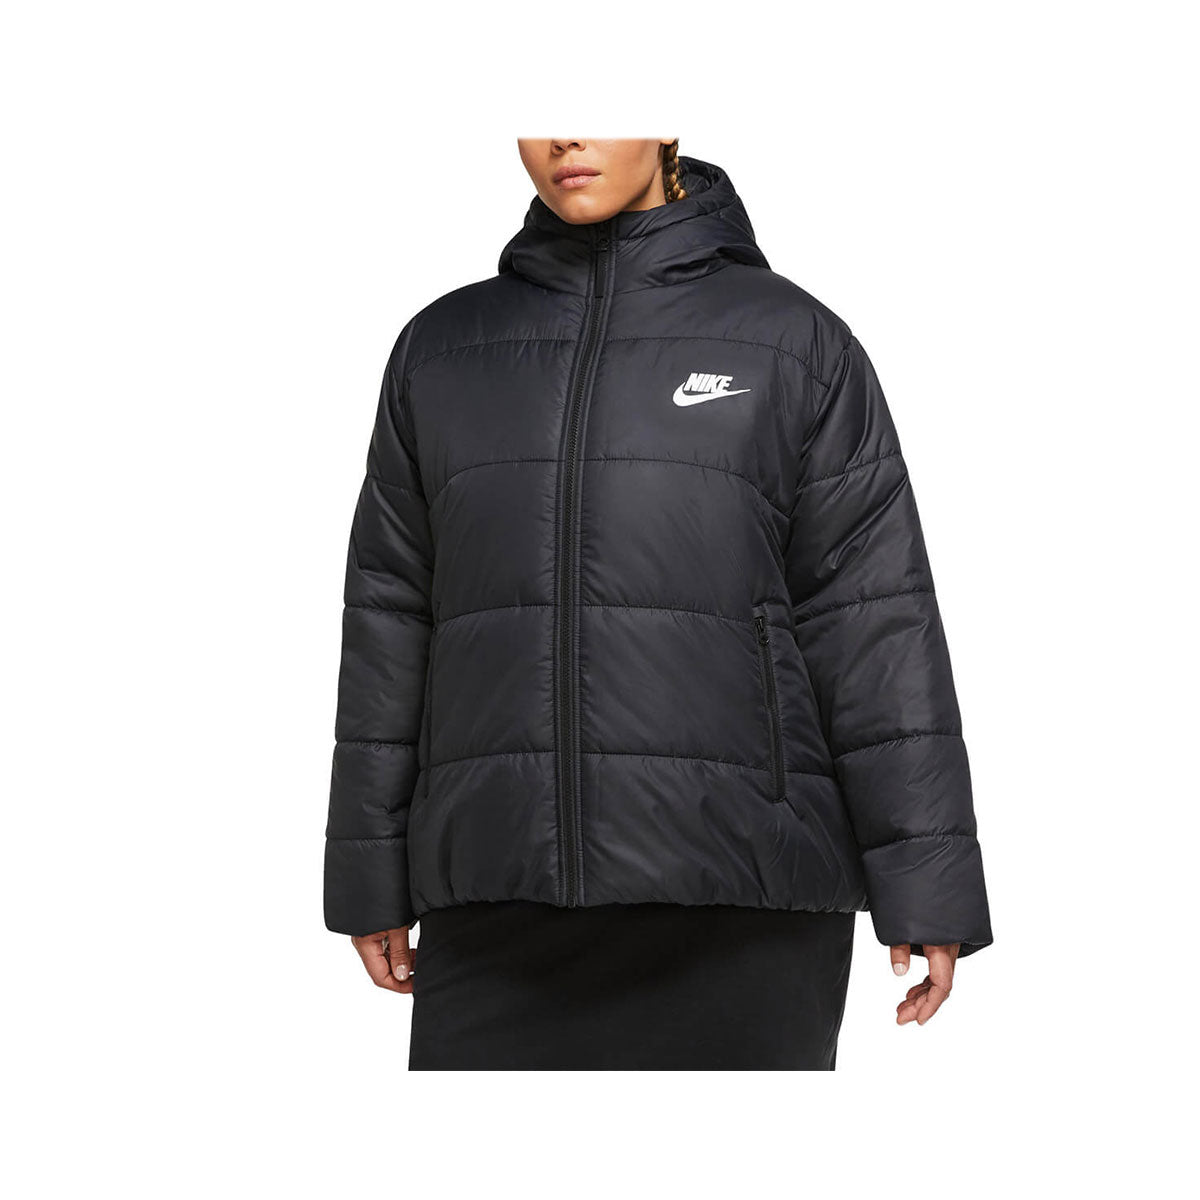 Nike Women's Core Plus Syntethic Jacket